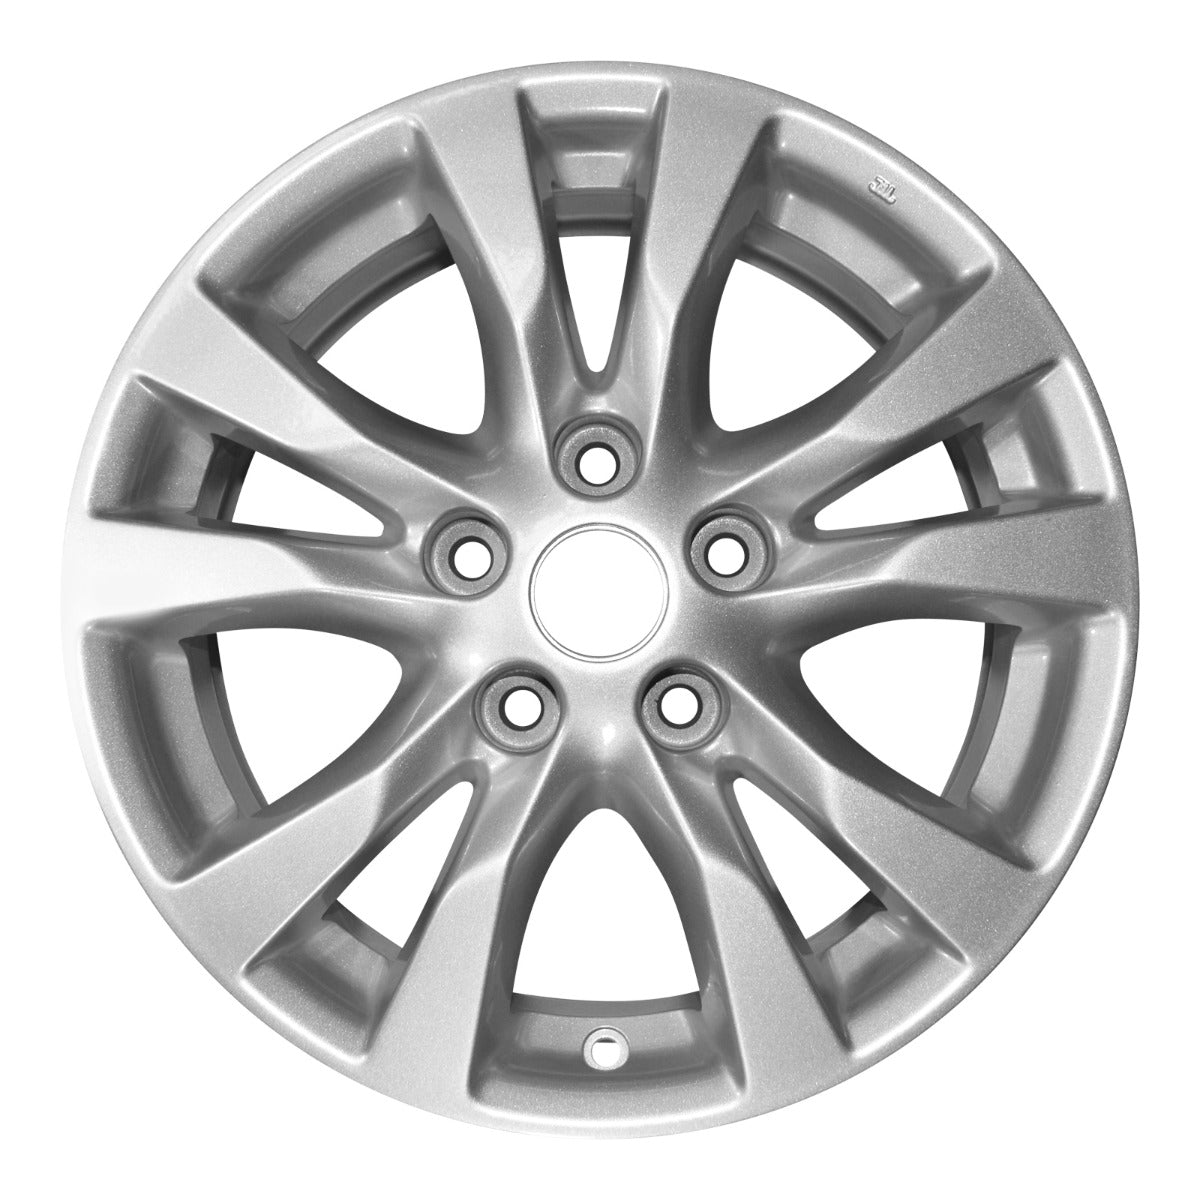 2015 Nissan Altima New 16" Replacement Wheel Rim RW62718S